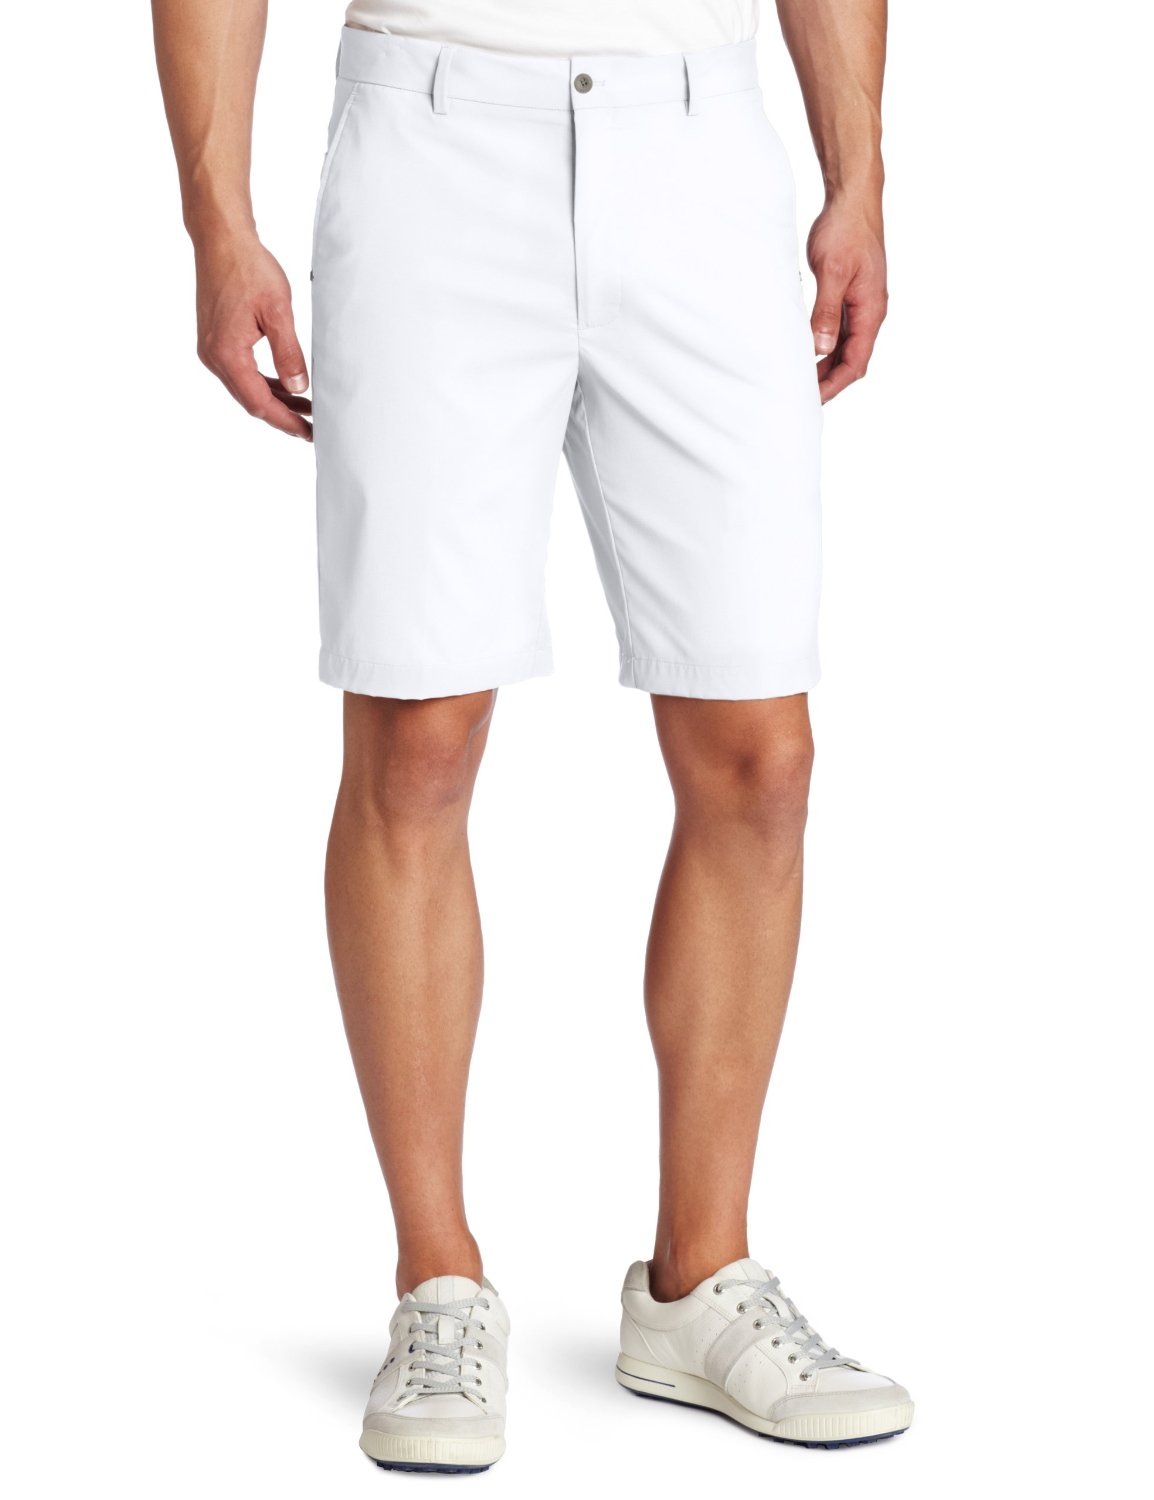 Greg Norman Collection 5 Pocket Tech Golf Shorts